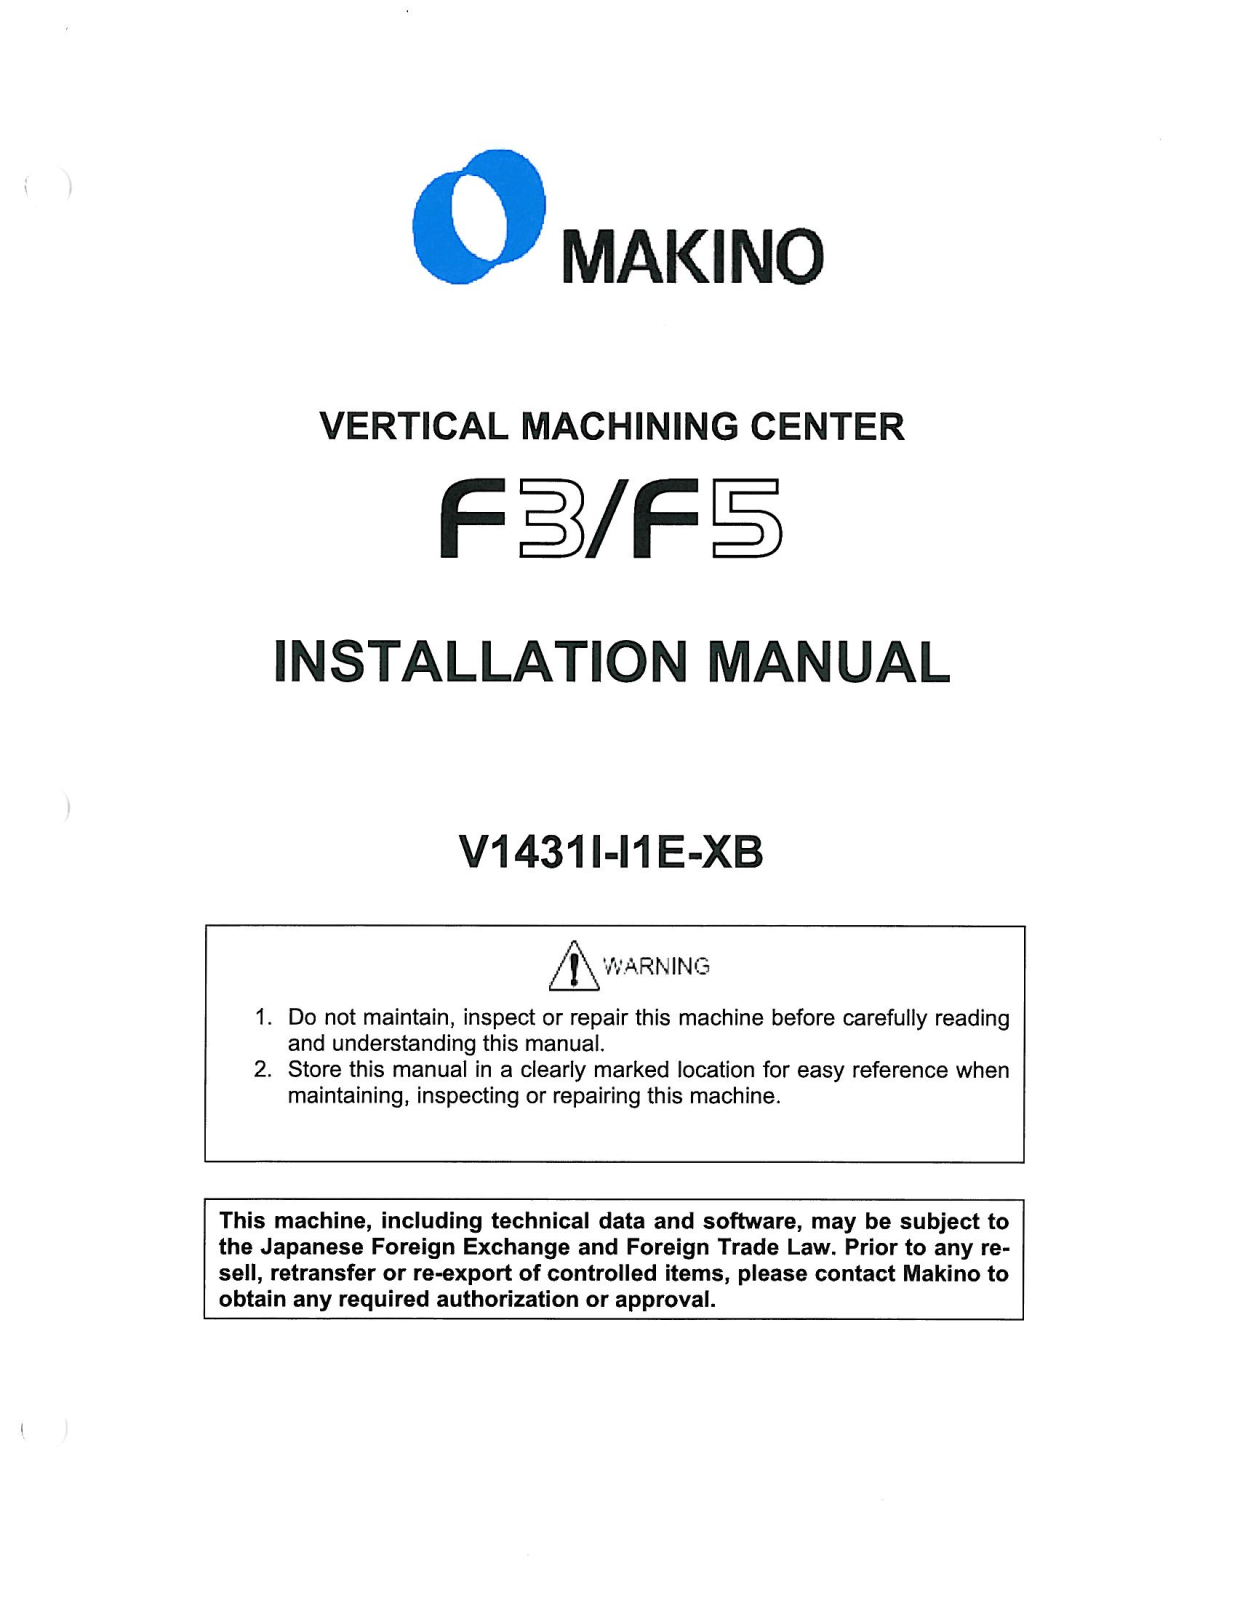 makino F3, F5 Installation Manual